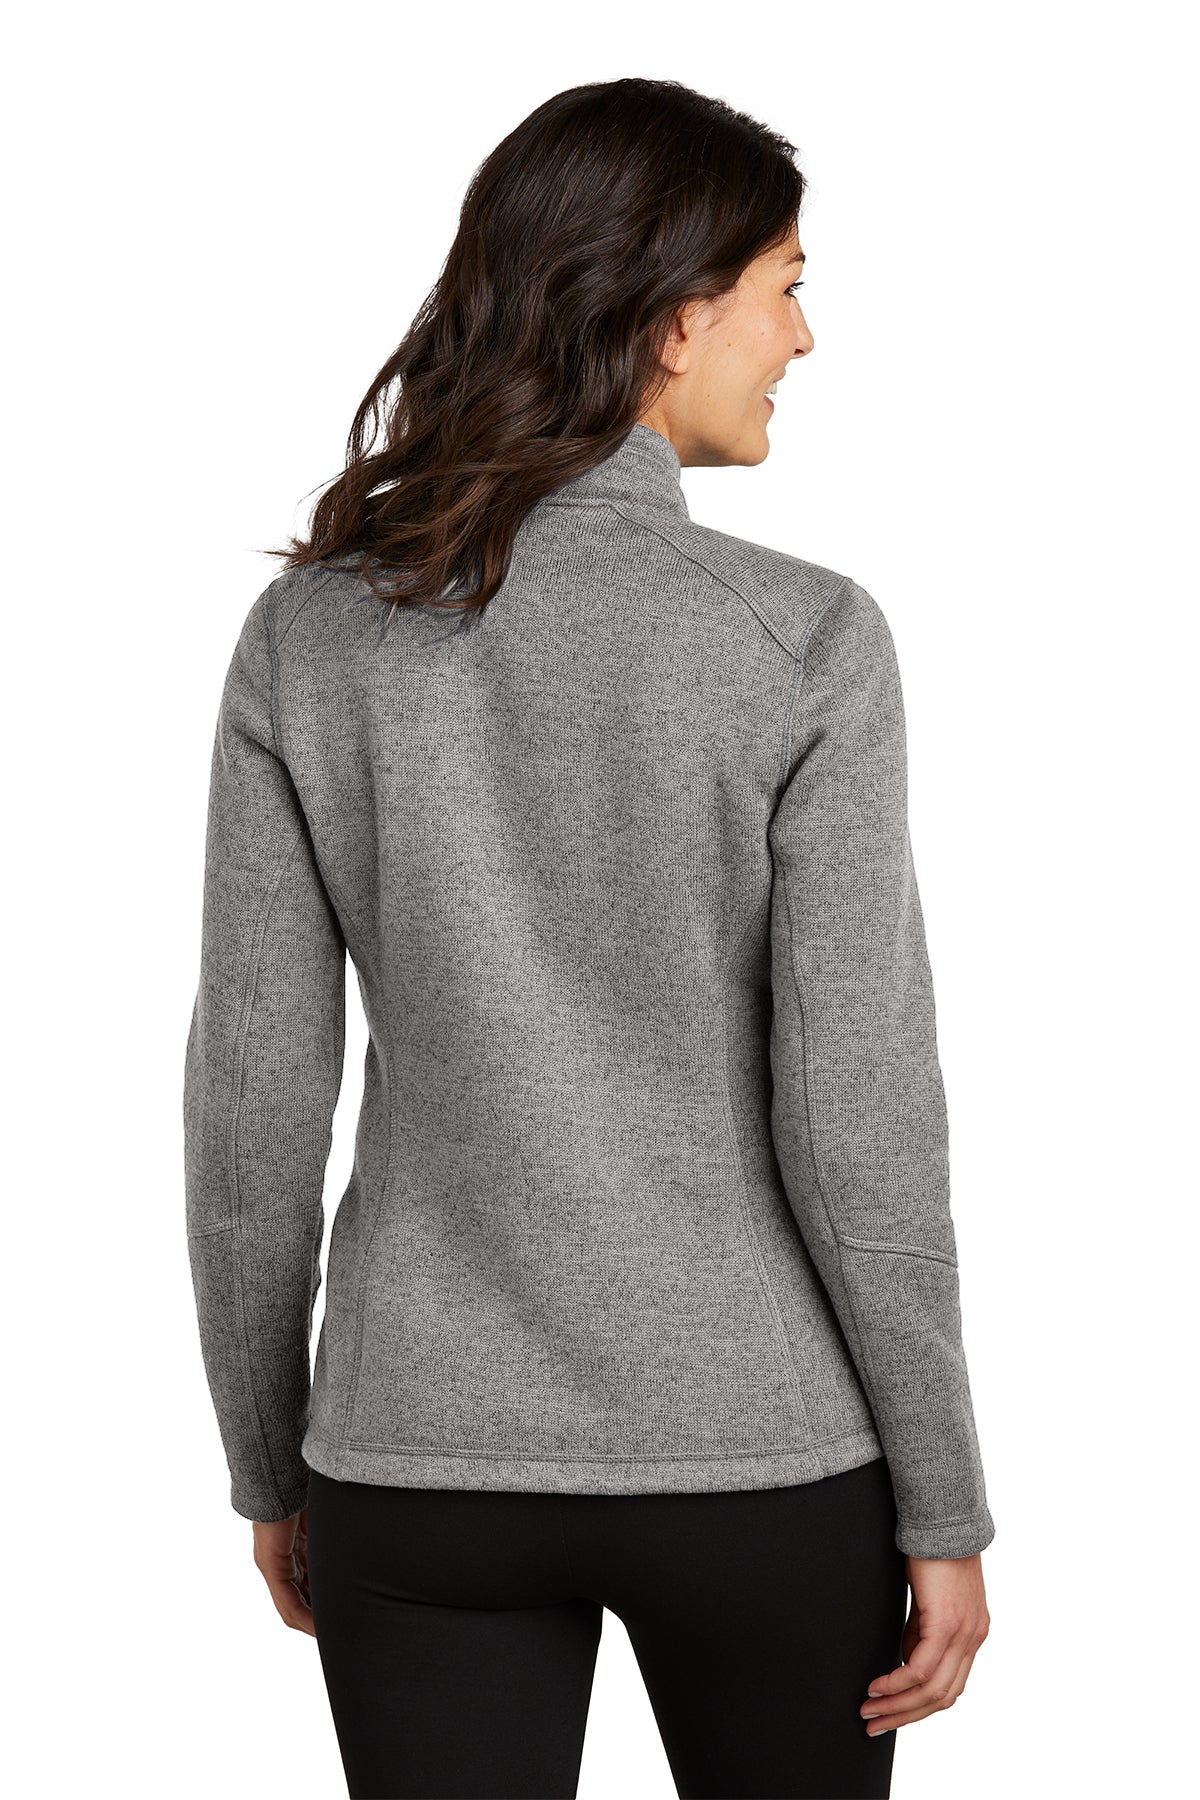 Port Authority Ladies Arc Sweater Fleece Customized Jackets, Deep Smoke Heather